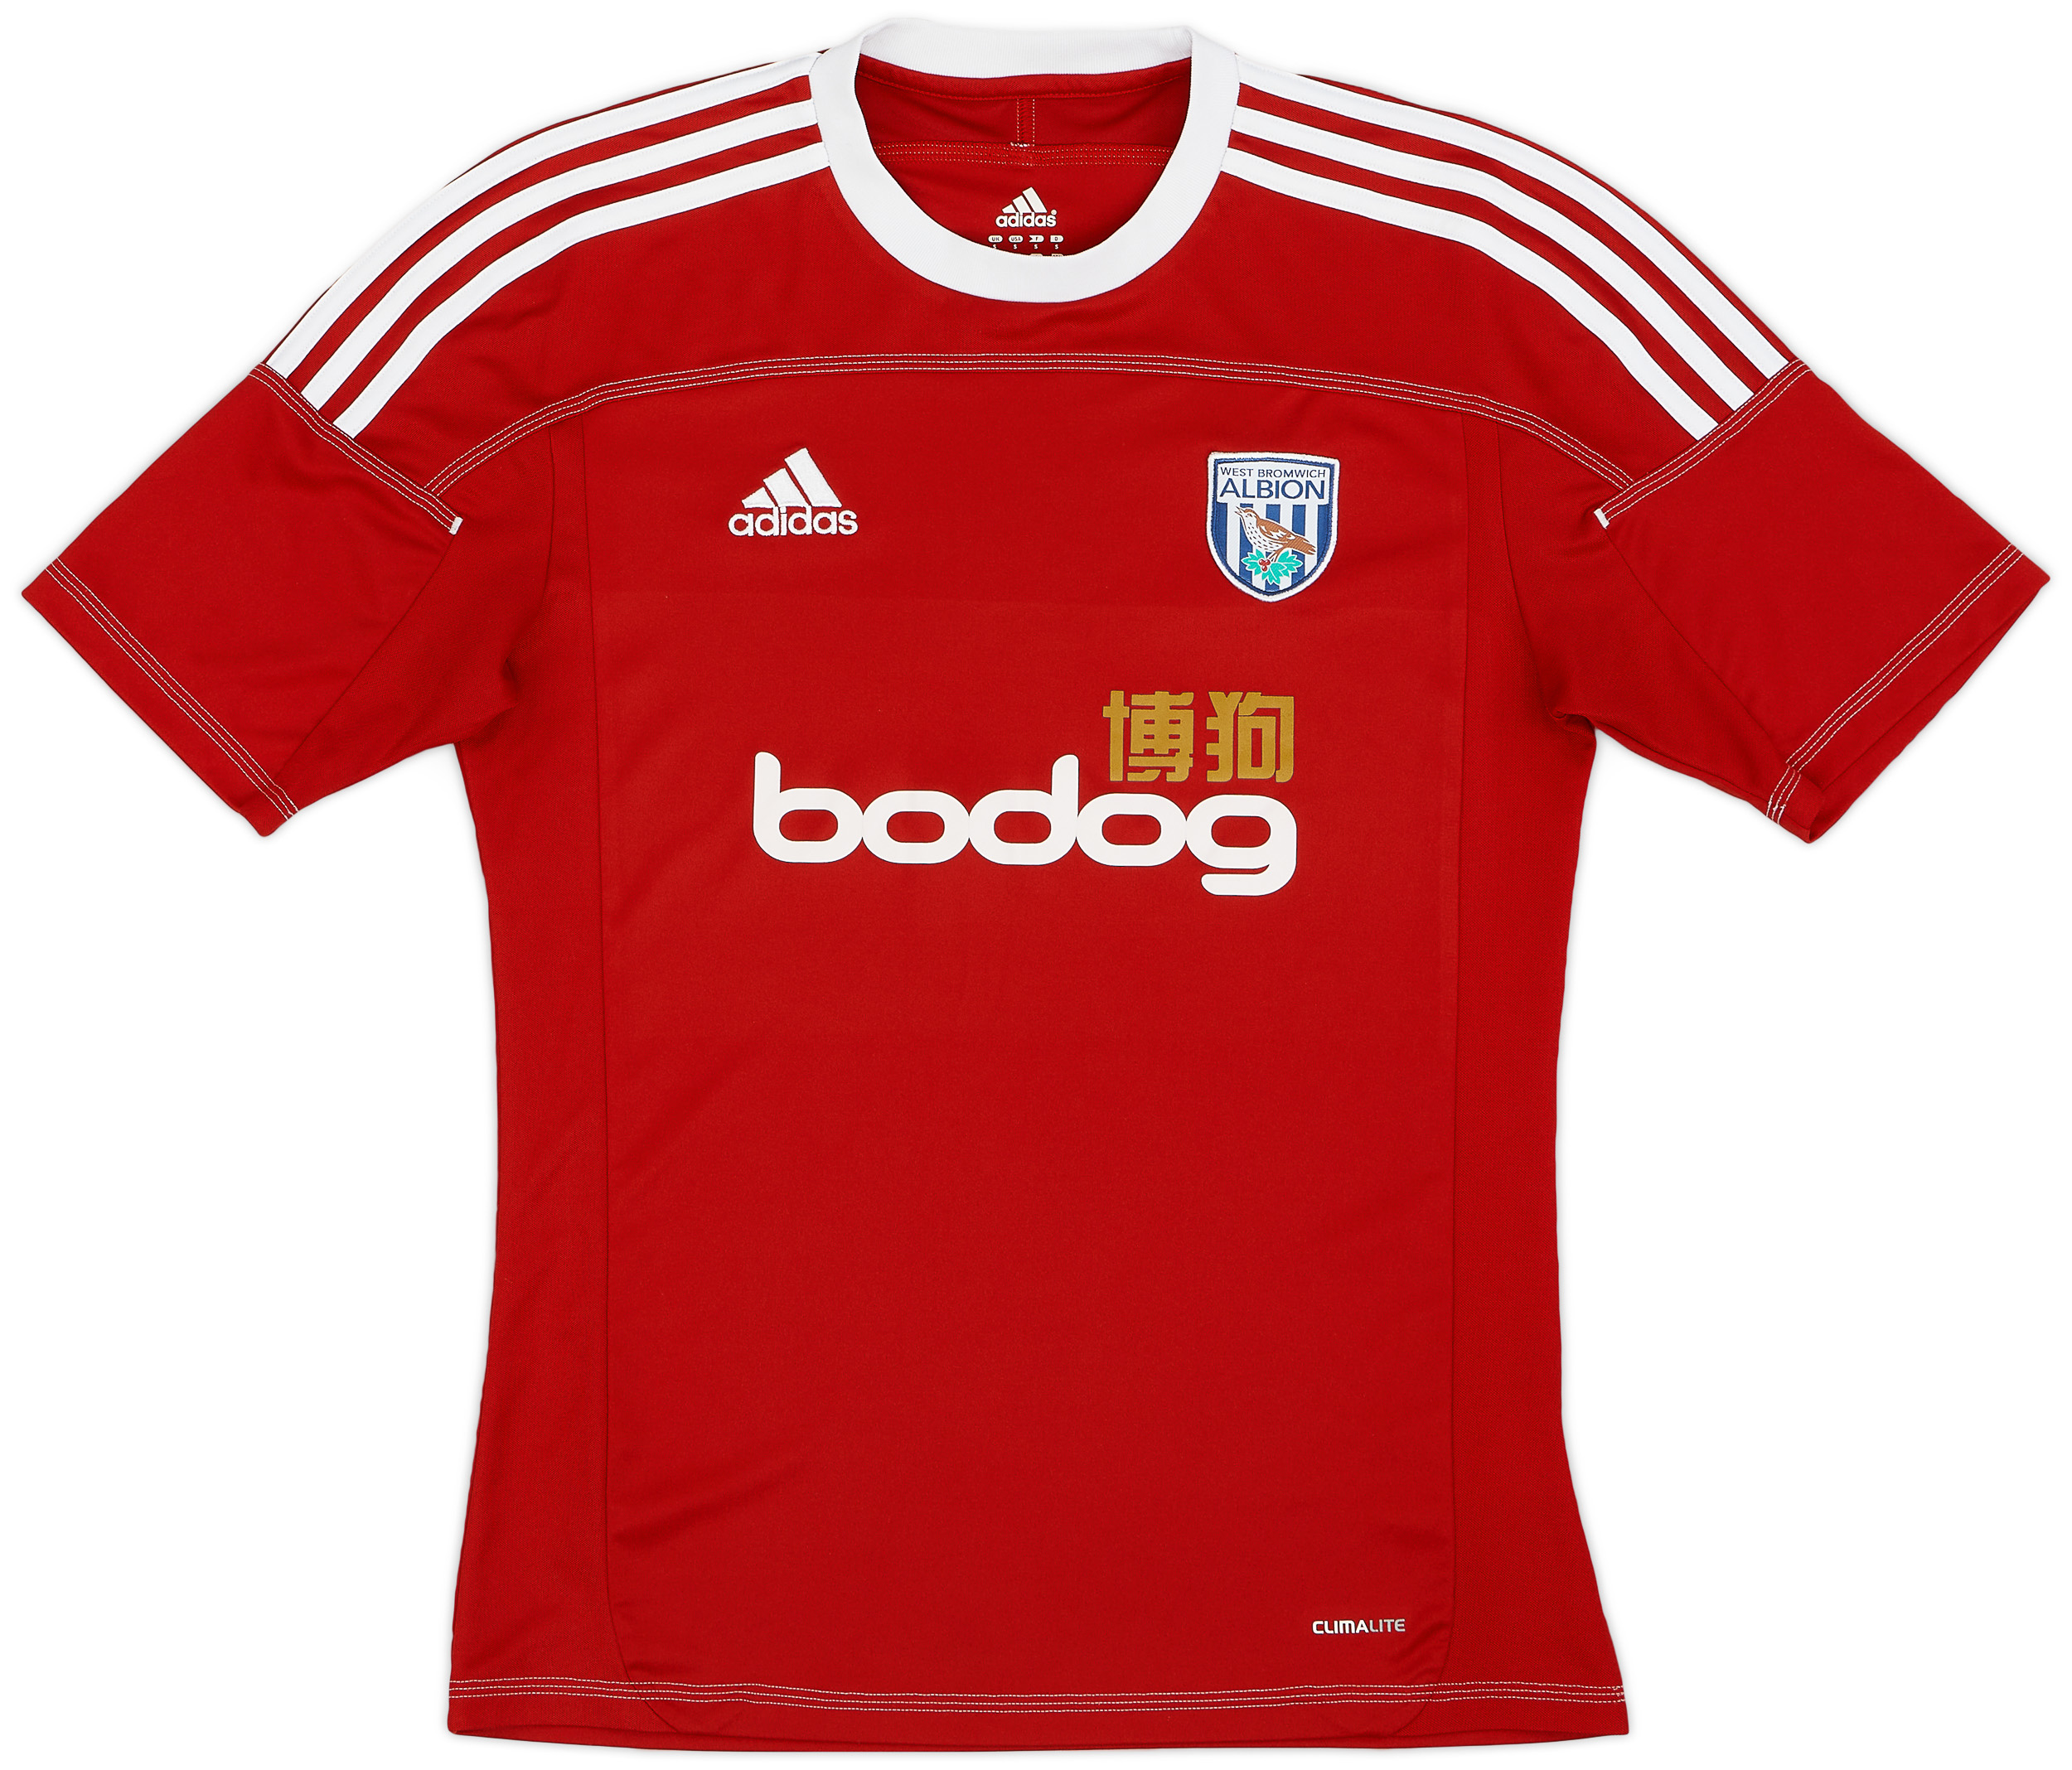 West Bromwich Albion  Terceira camisa (Original)